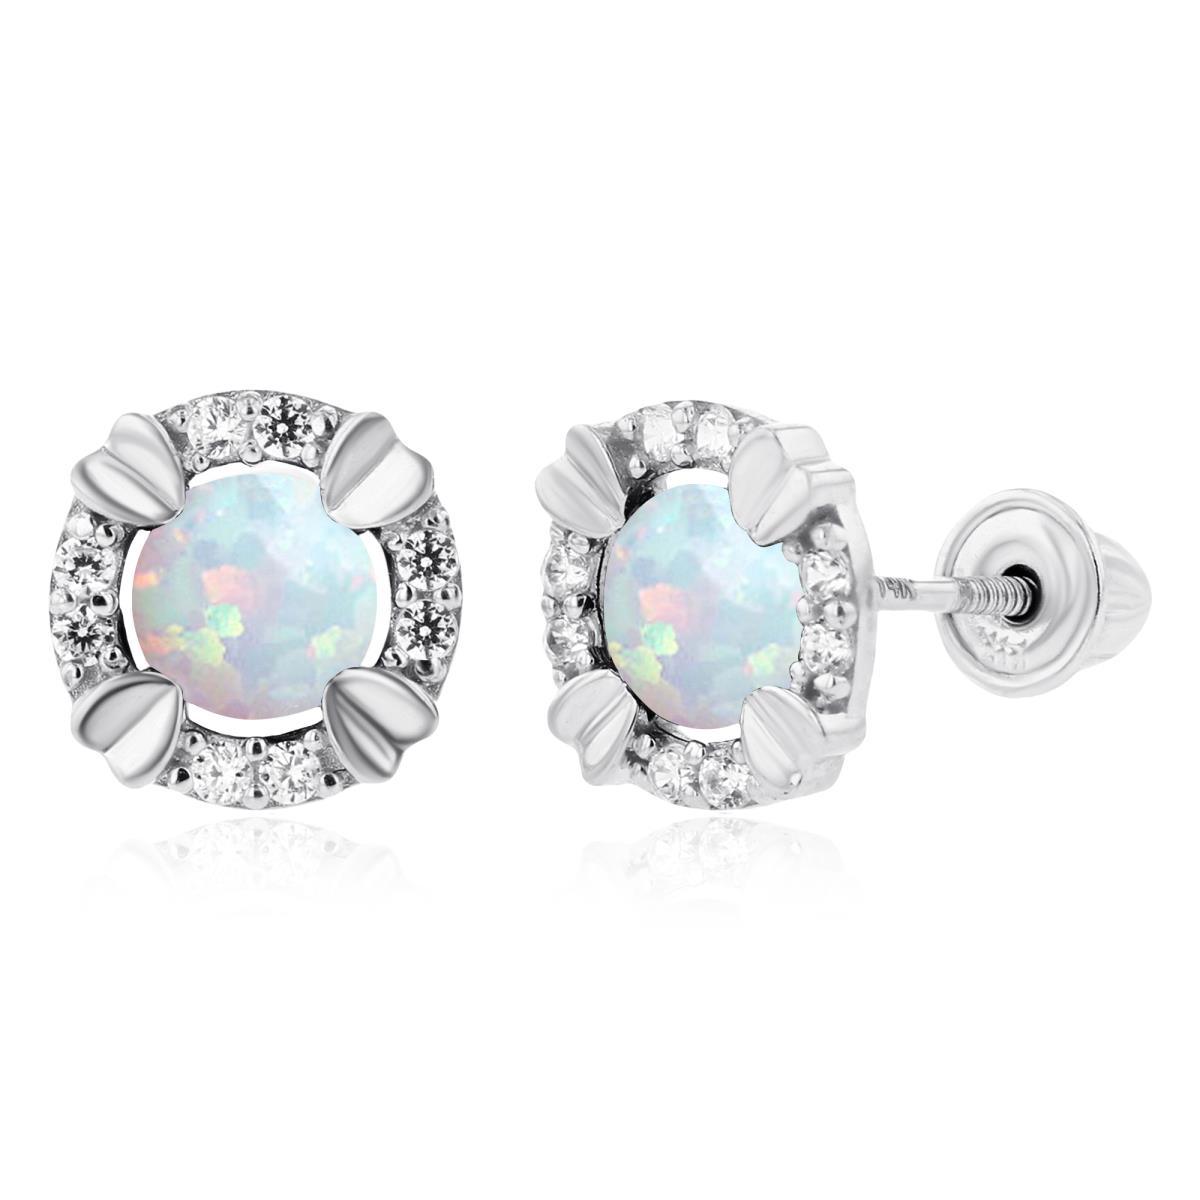 14K White Gold 4mm Round Created Opal & 1mm Created White Sapphire Halo Screwback Earrings